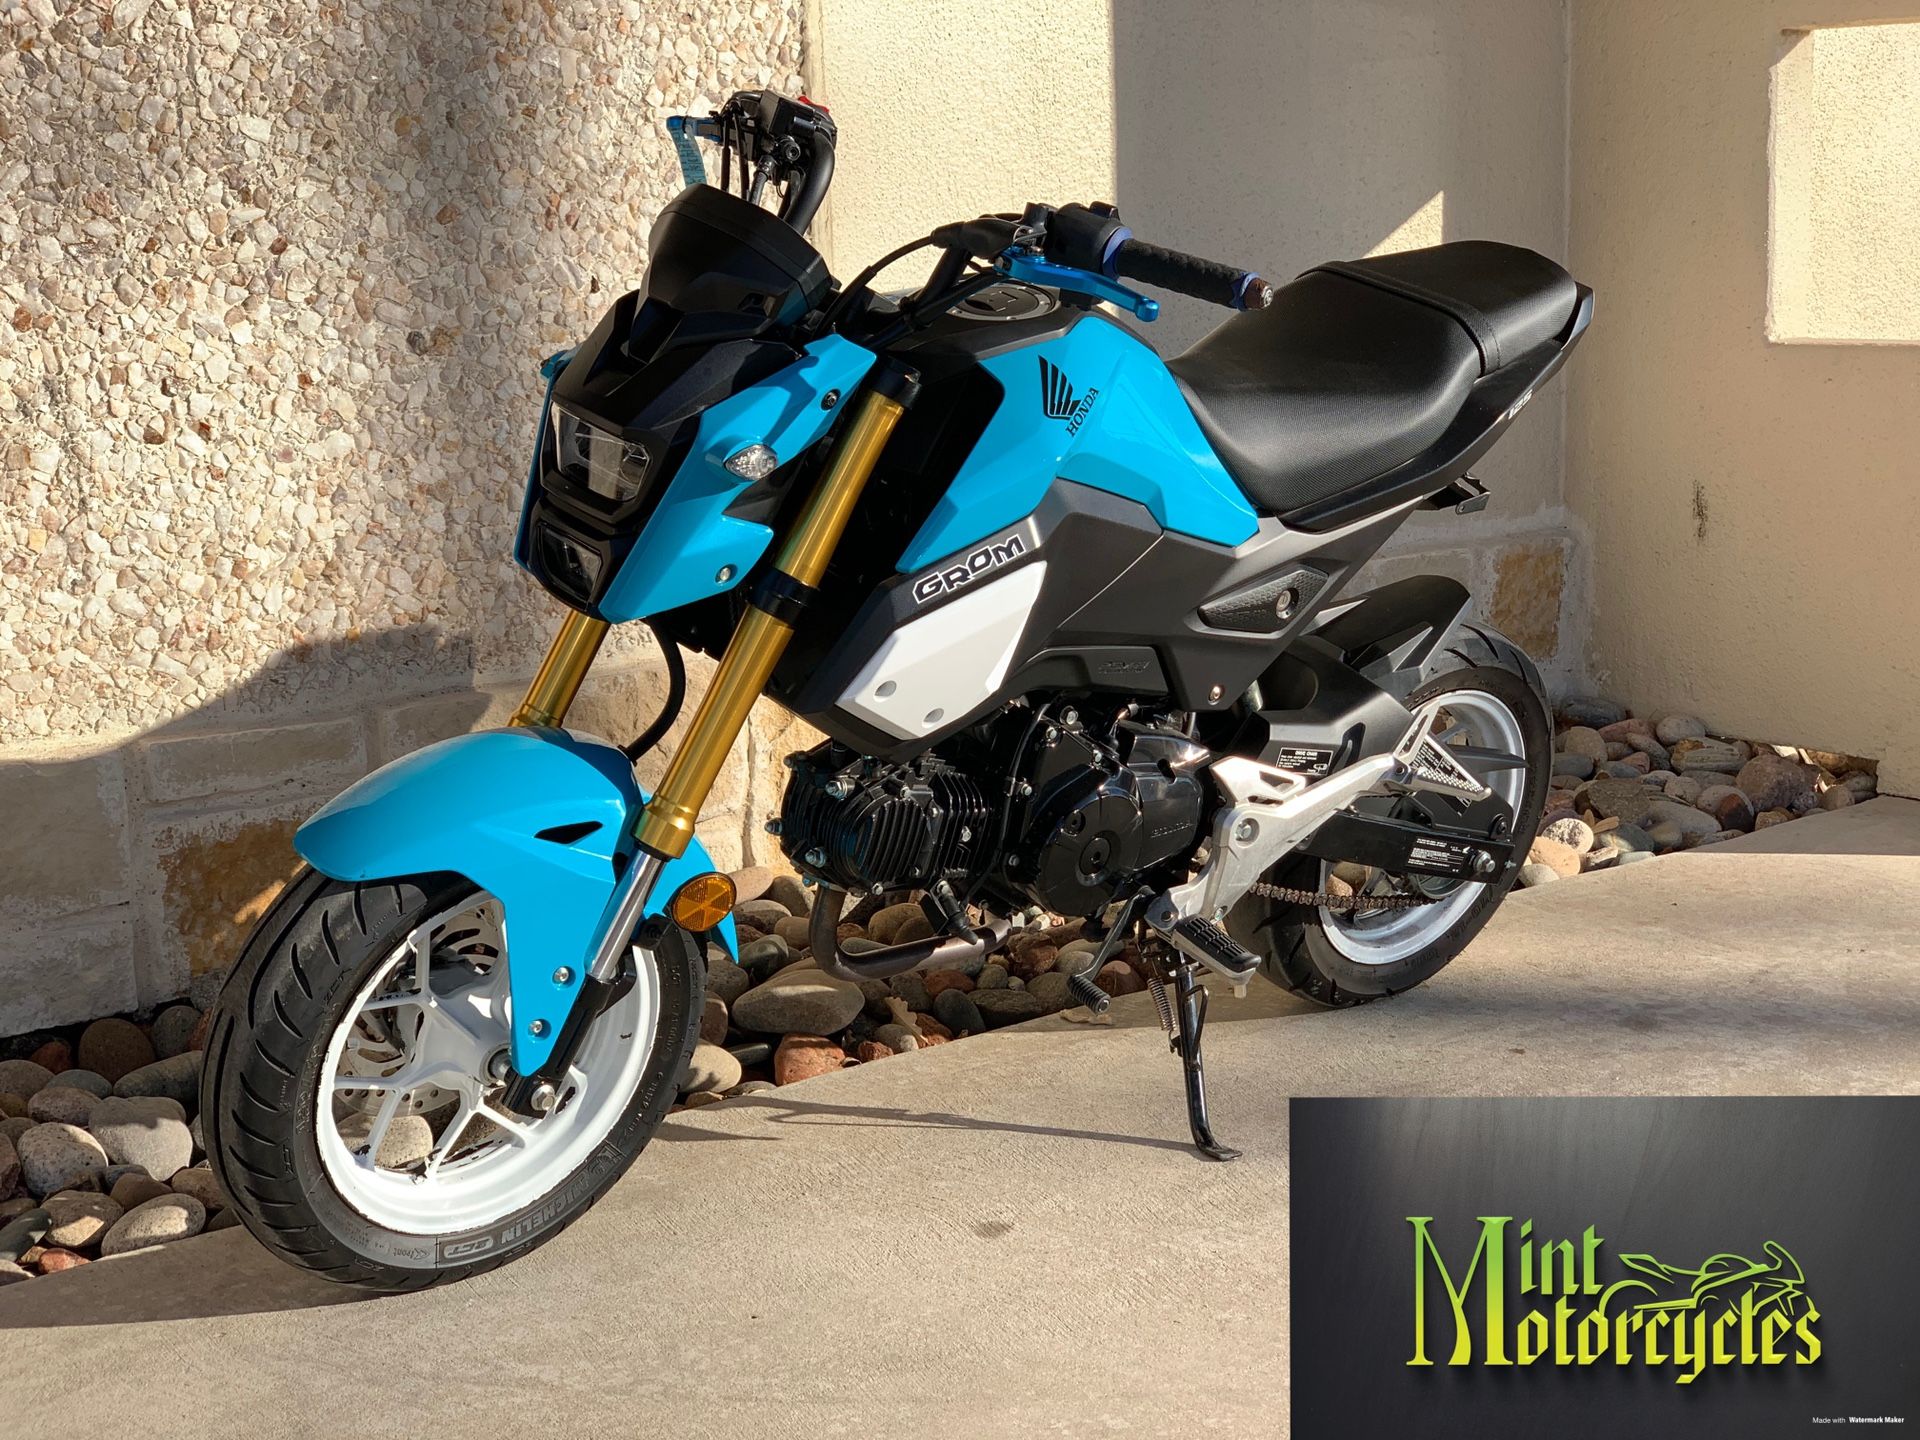 2019 Honda Grom *Mint motorcycles Dallas*